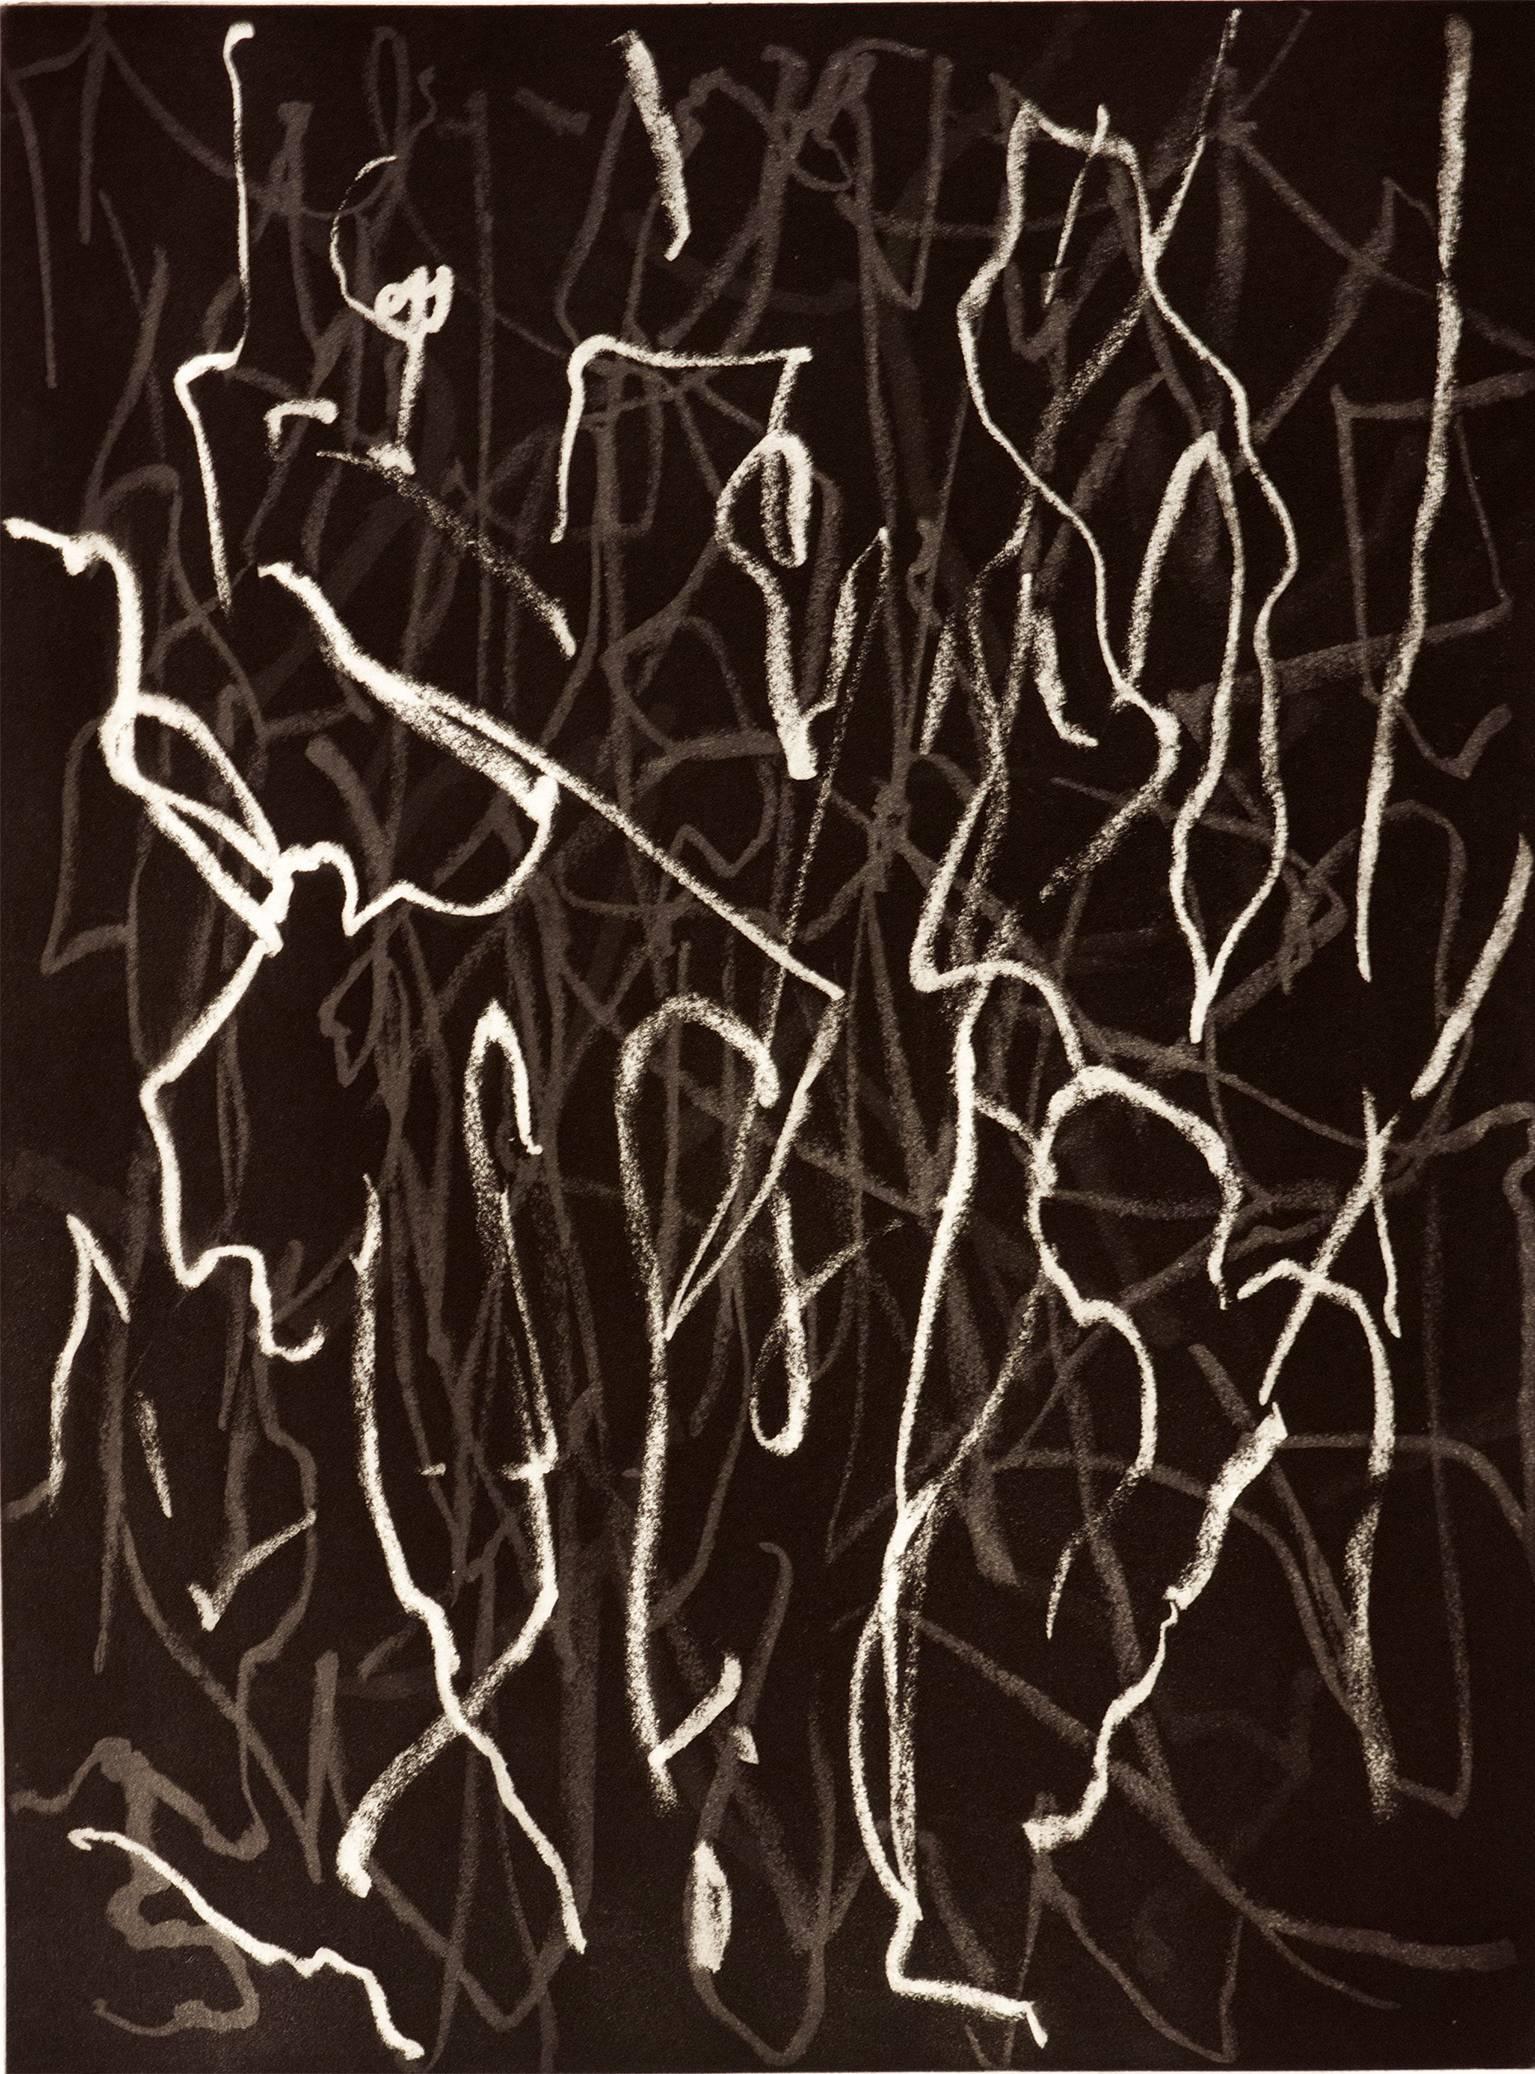 Kumi Korf Abstract Print - "Dream Talk", abstract calligraphic aquatint print, black and white, Japanese.